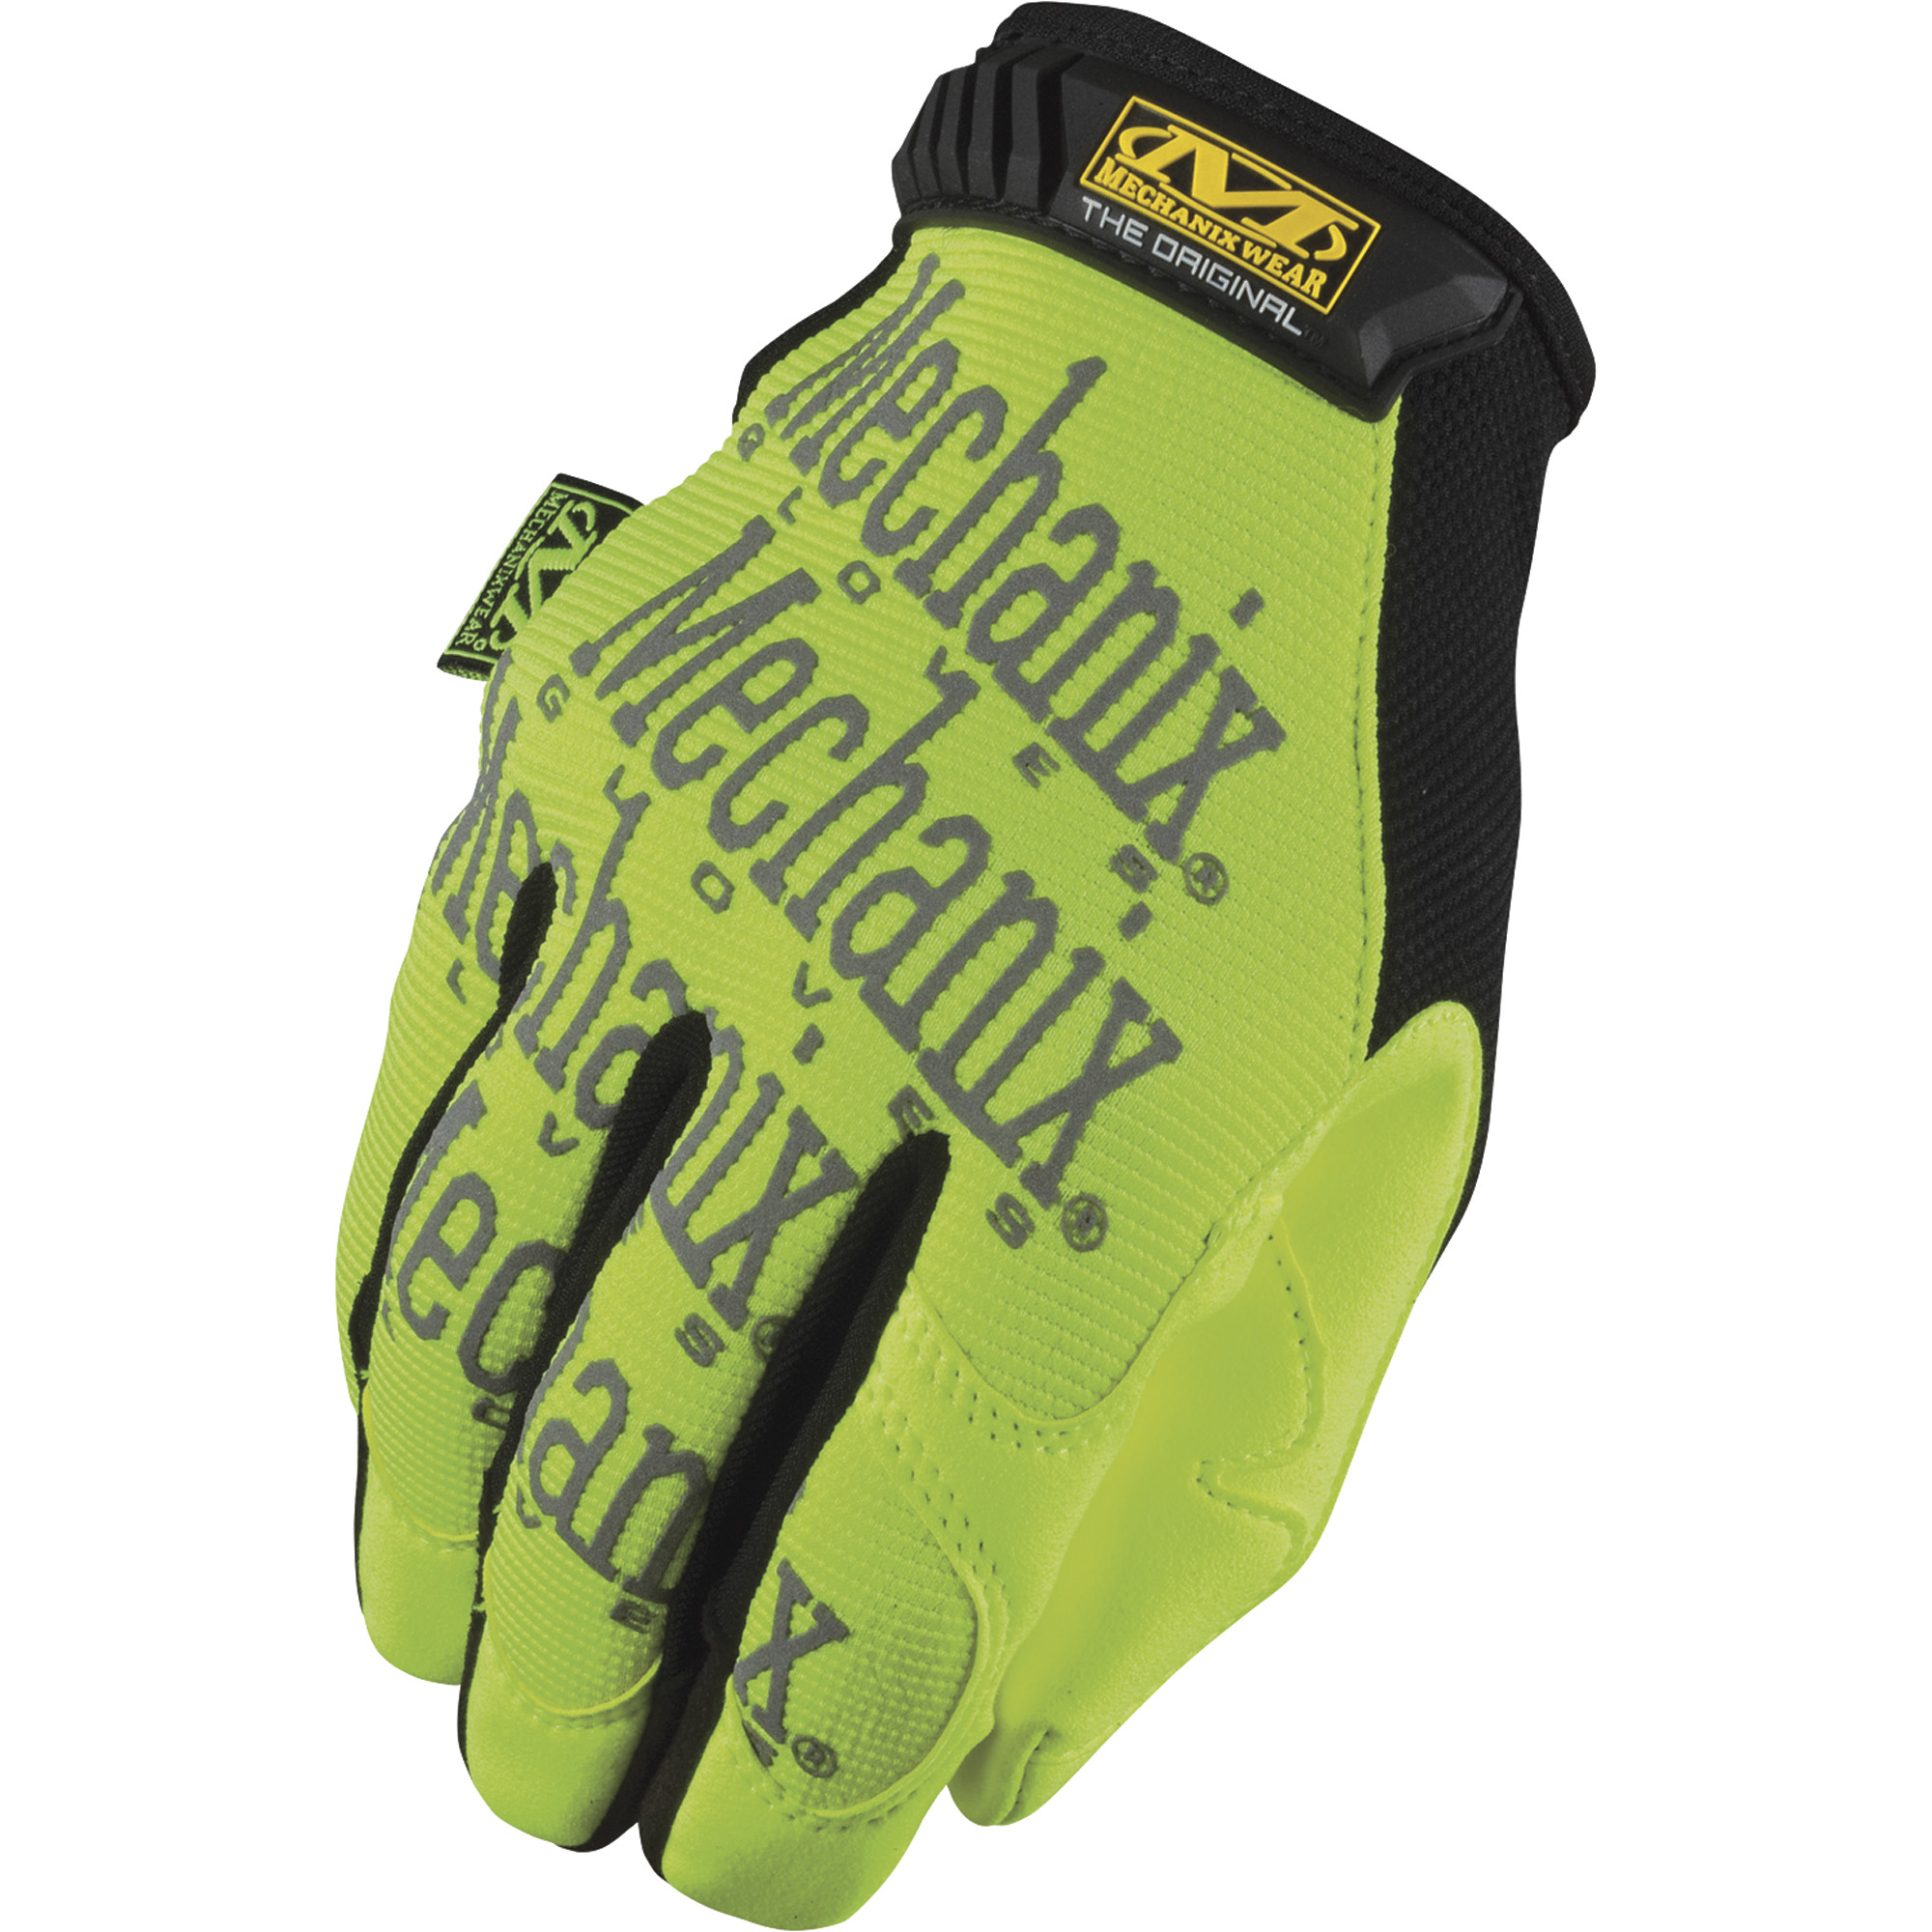 Mechanix Men's Wear Safety Original Glove - Hi-Vis Yellow, Large, Model SMG-91